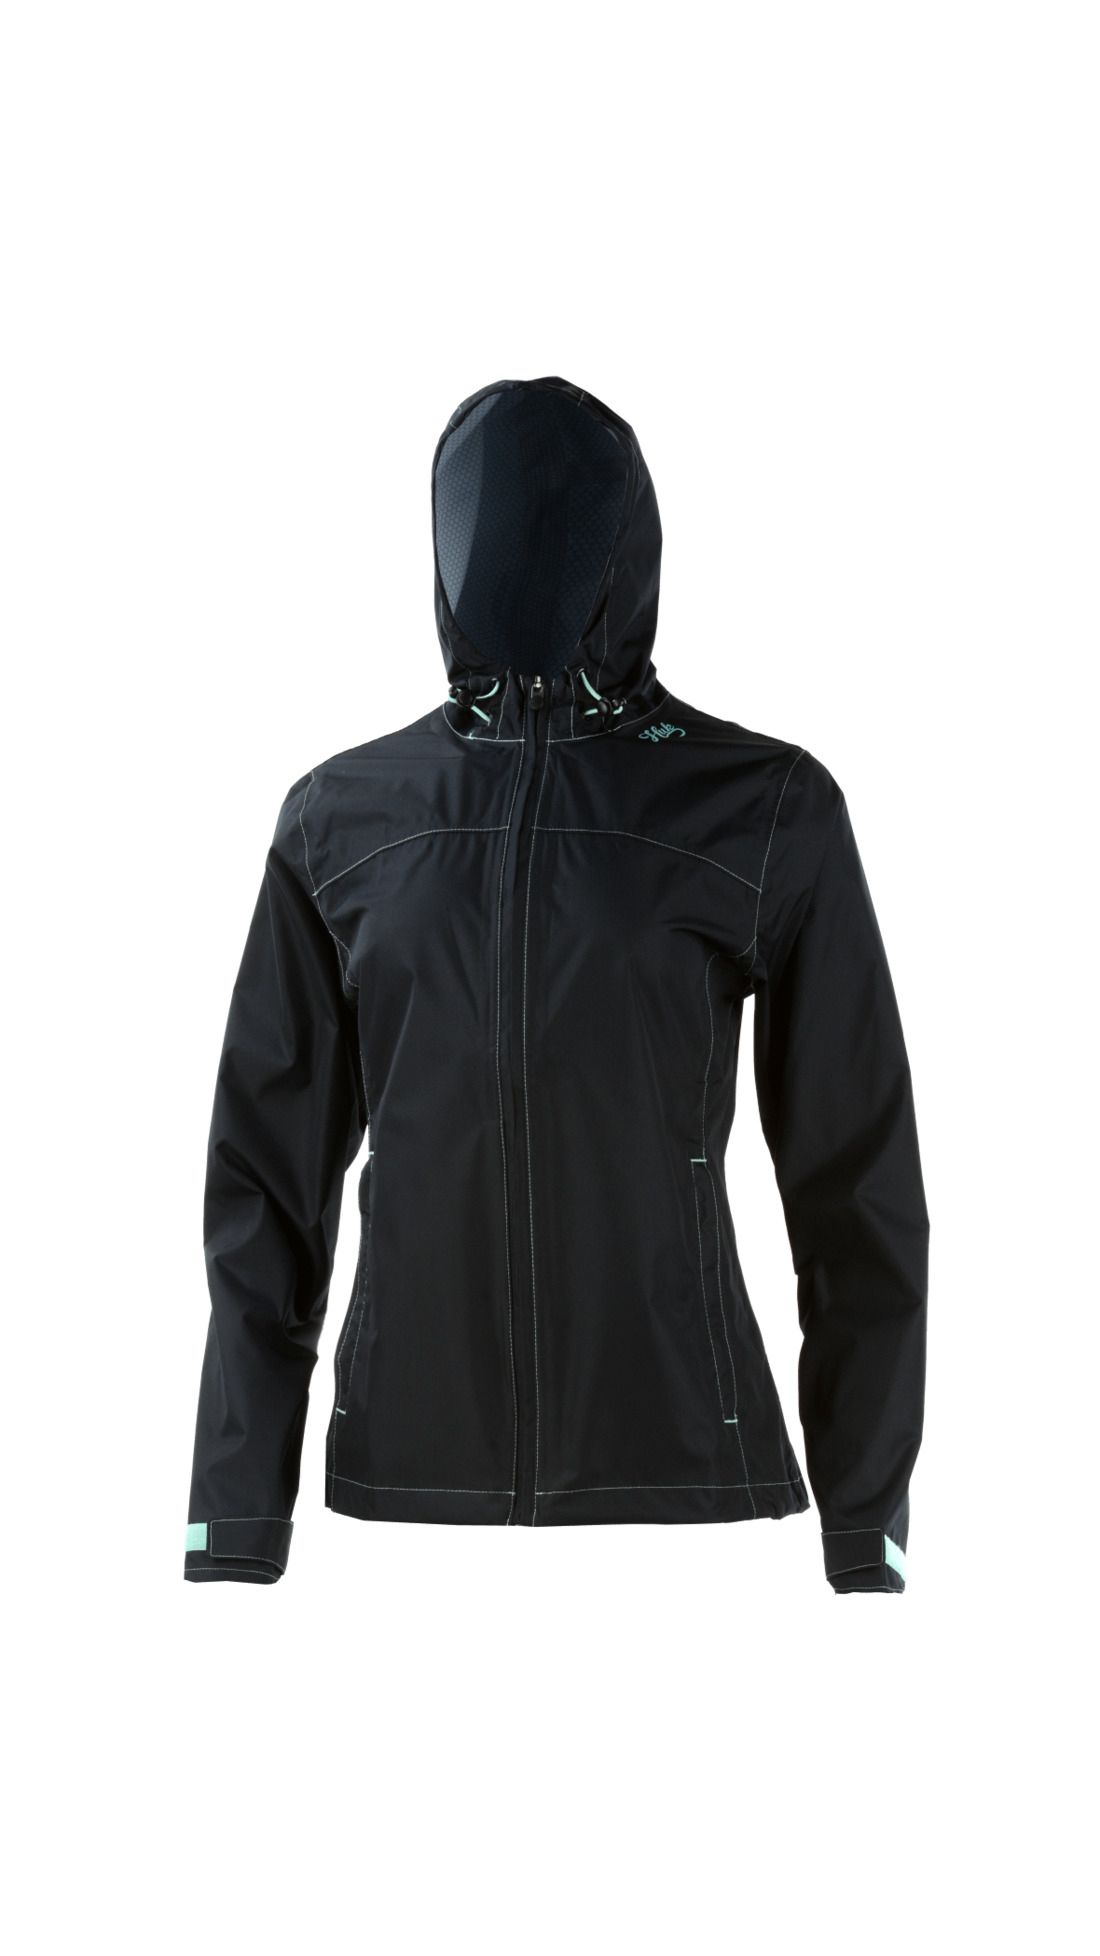 huk rain jacket Cheap online - OFF 63%